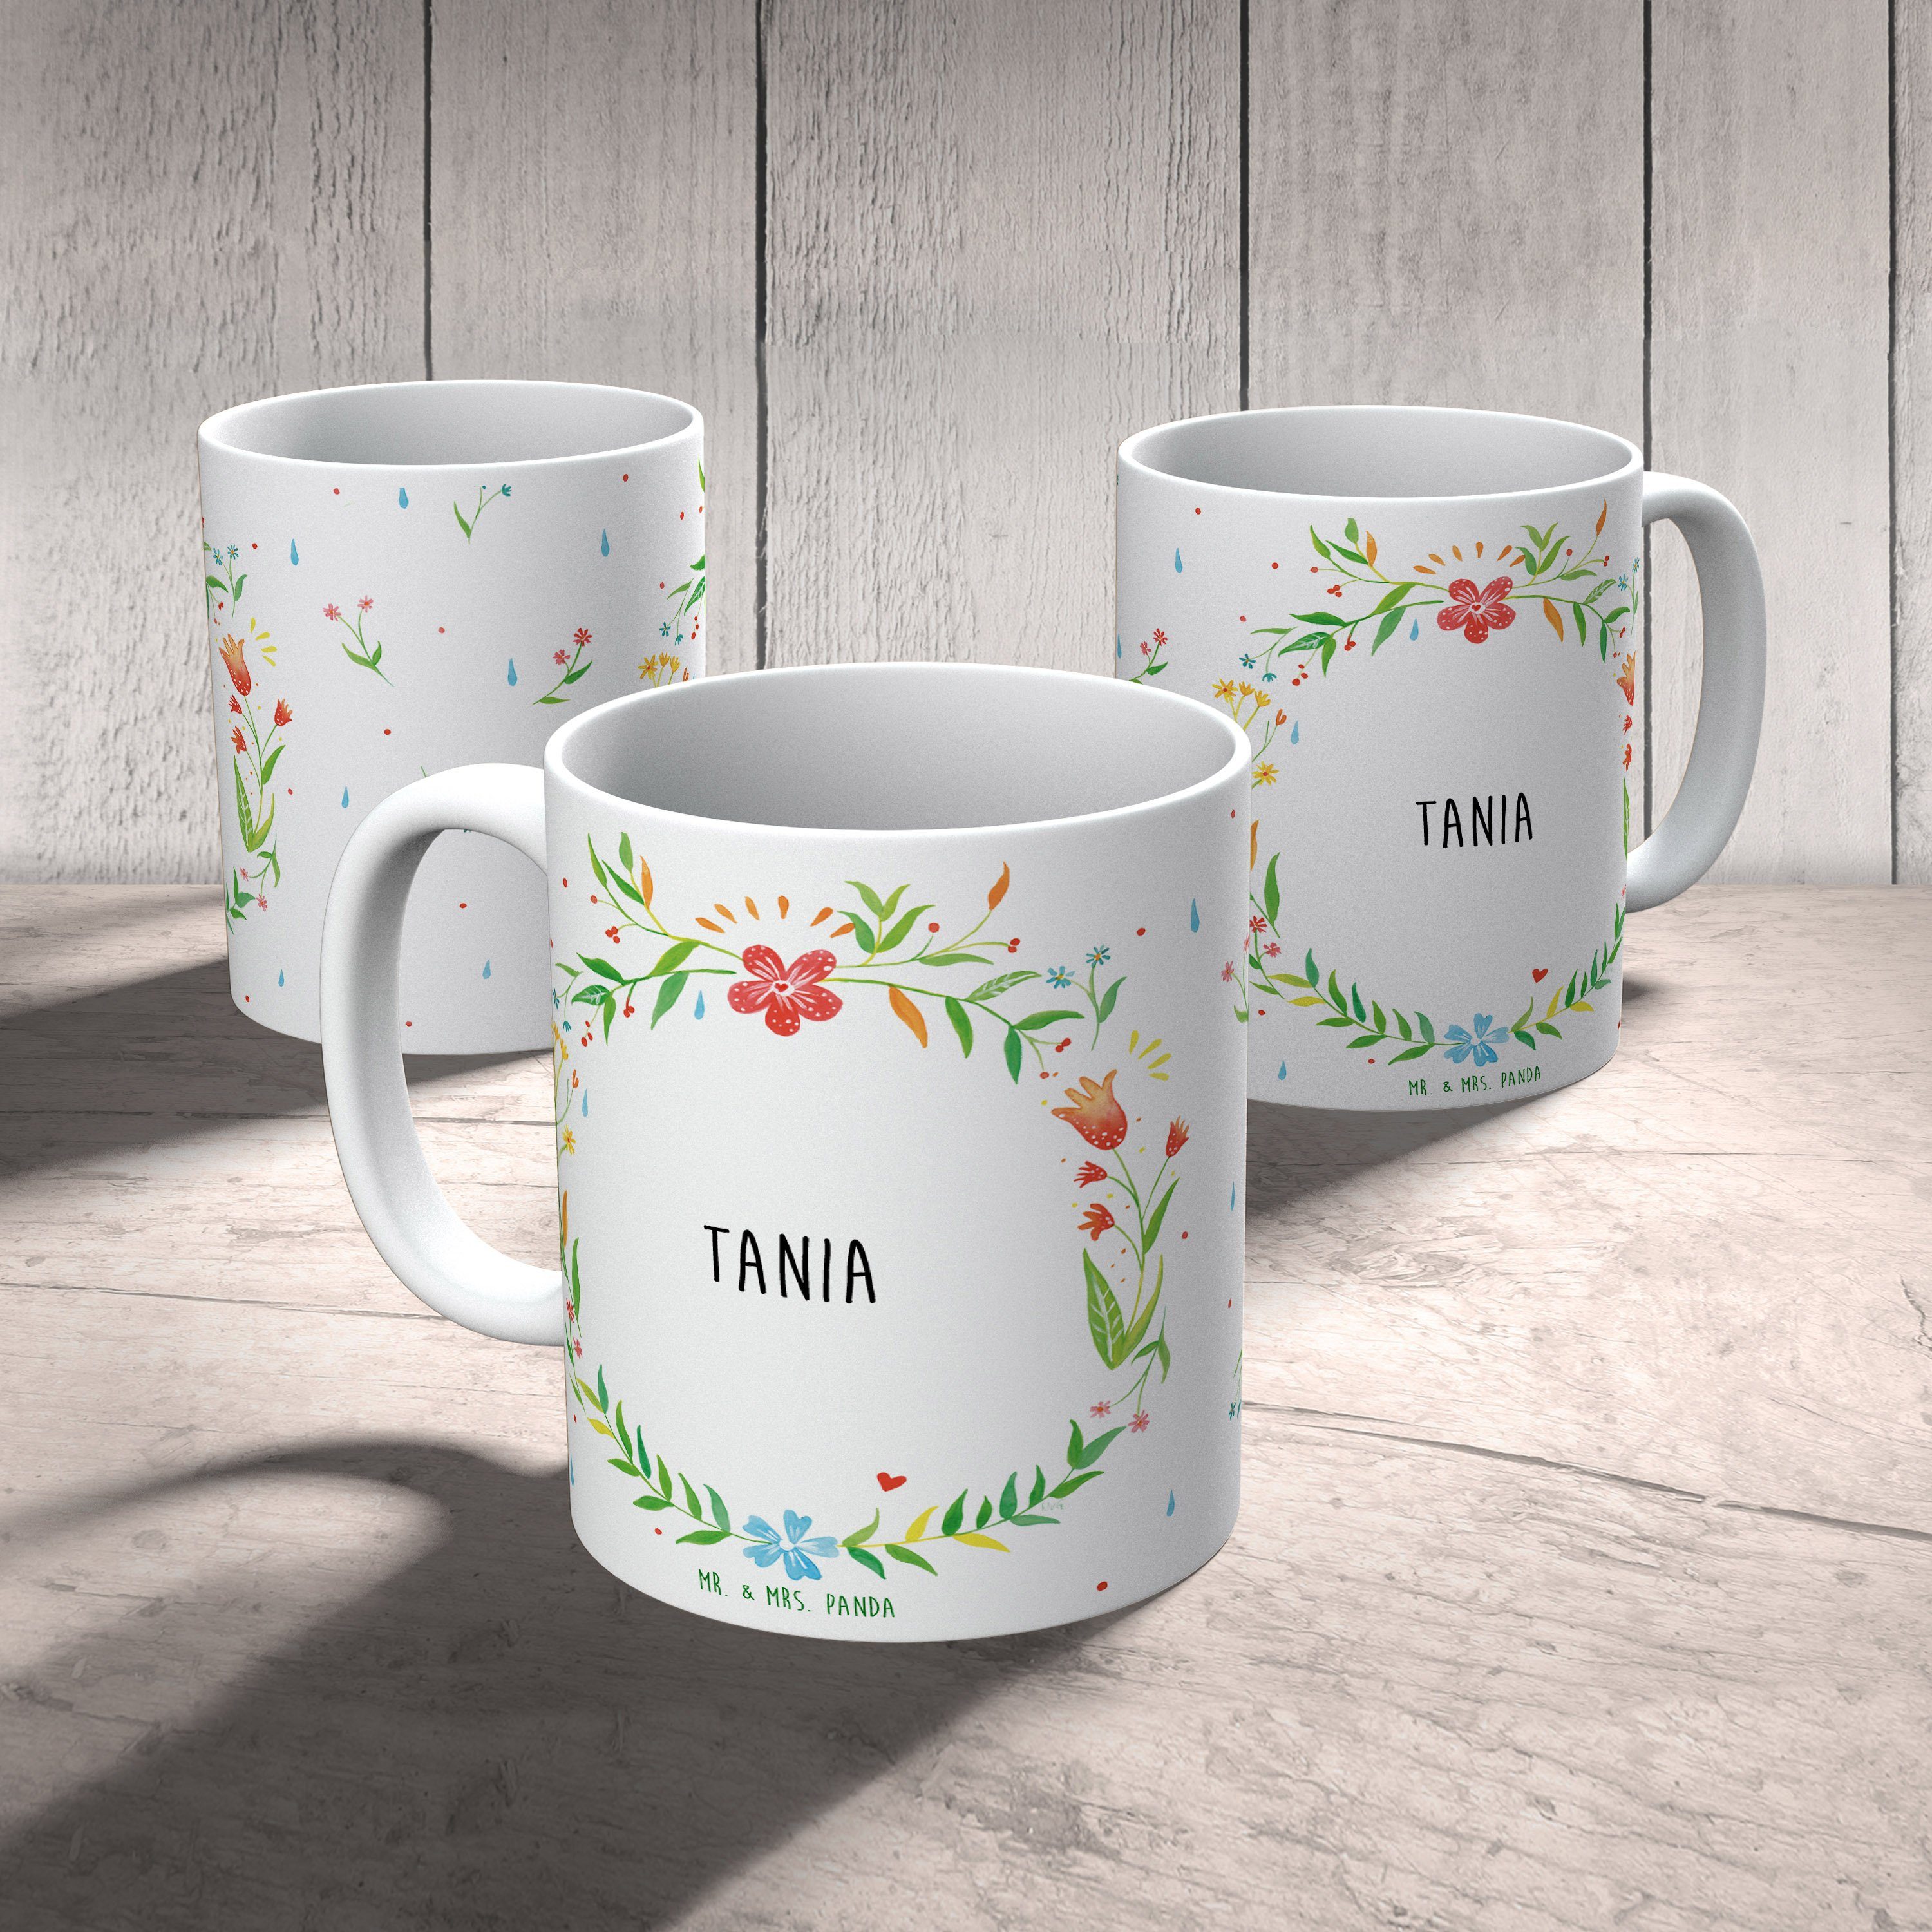 Mrs. Geschenk, Porzellantasse, & Mr. Panda Kaffeetasse, Tania Tasse Becher, - Sprüche, Keramik Tasse